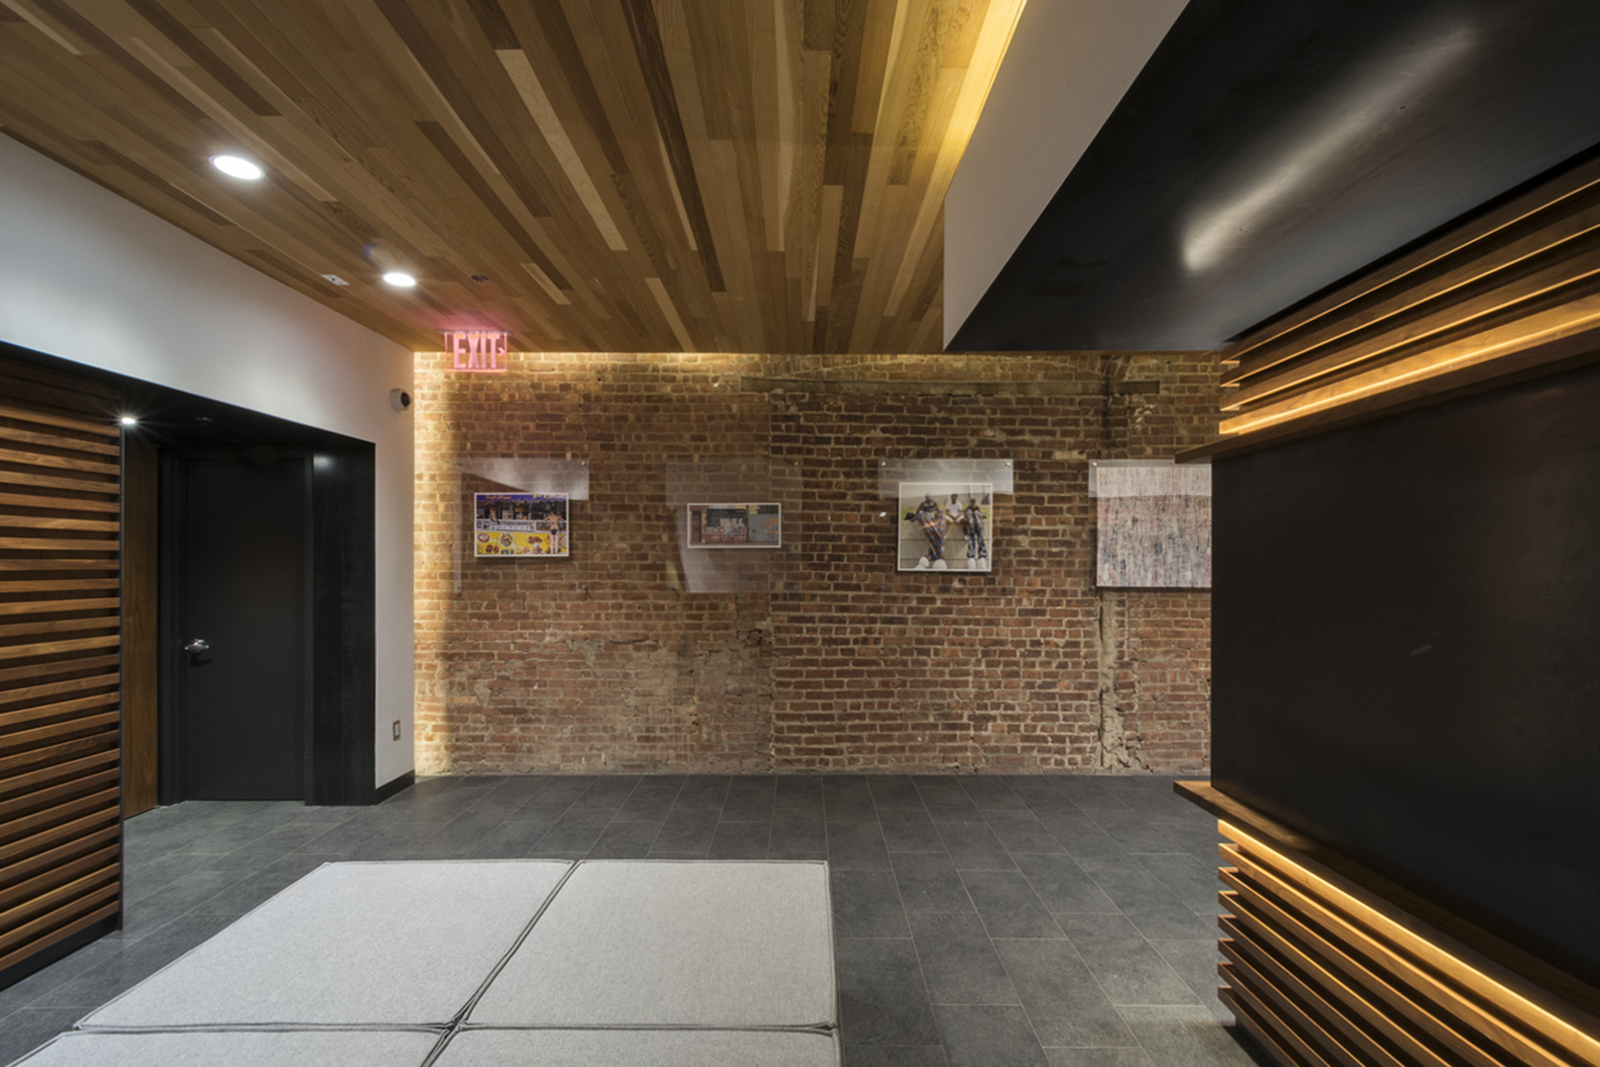 05-res4-resolution-4-architecture-modern-commercial-pineapple-street-lobby-renovation-brooklyn-newyork.jpg